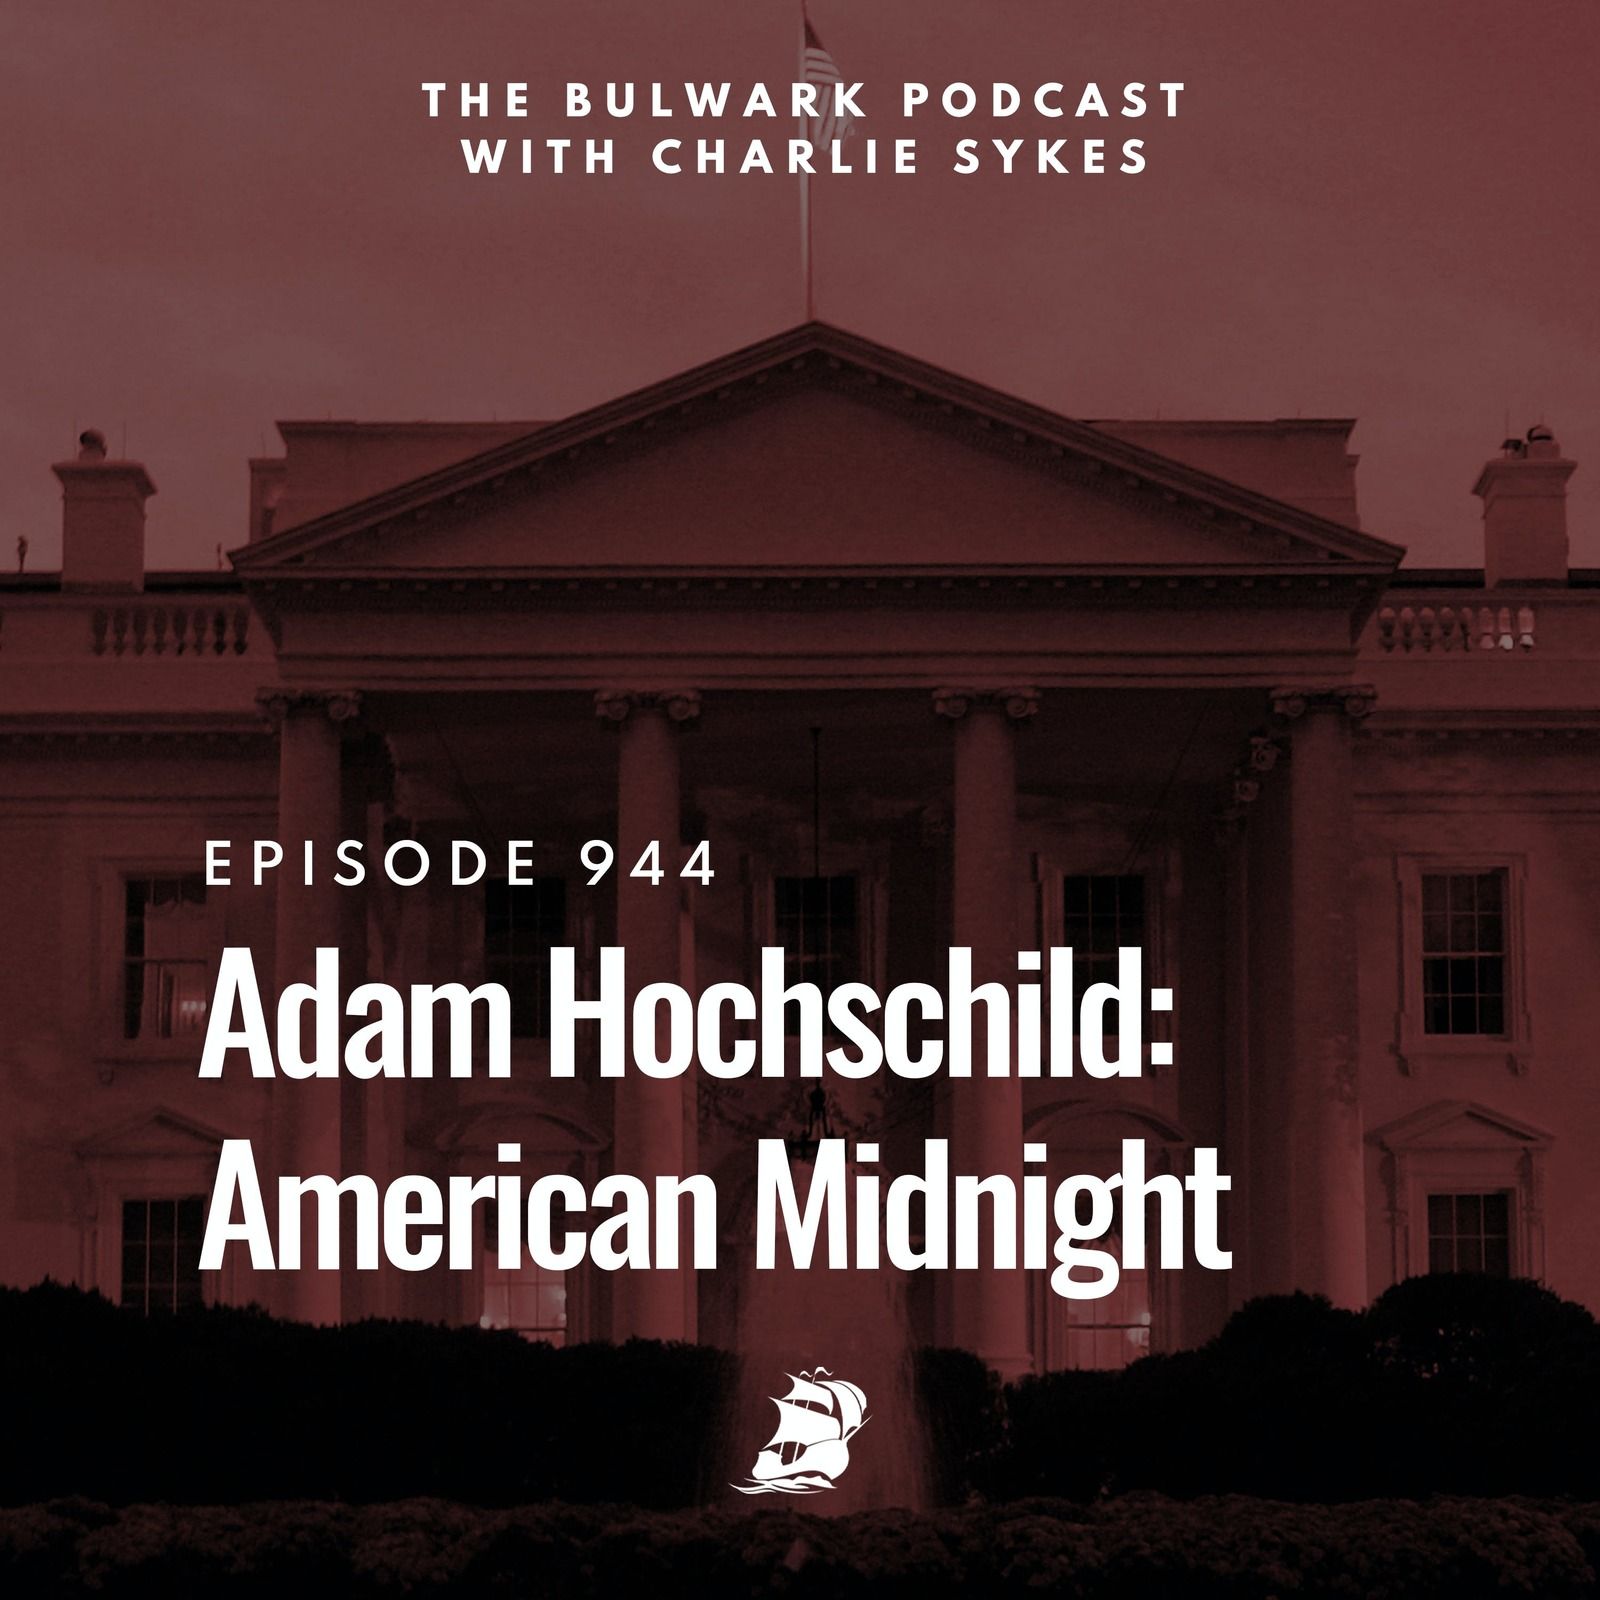 Adam Hochschild: American Midnight by The Bulwark Podcast